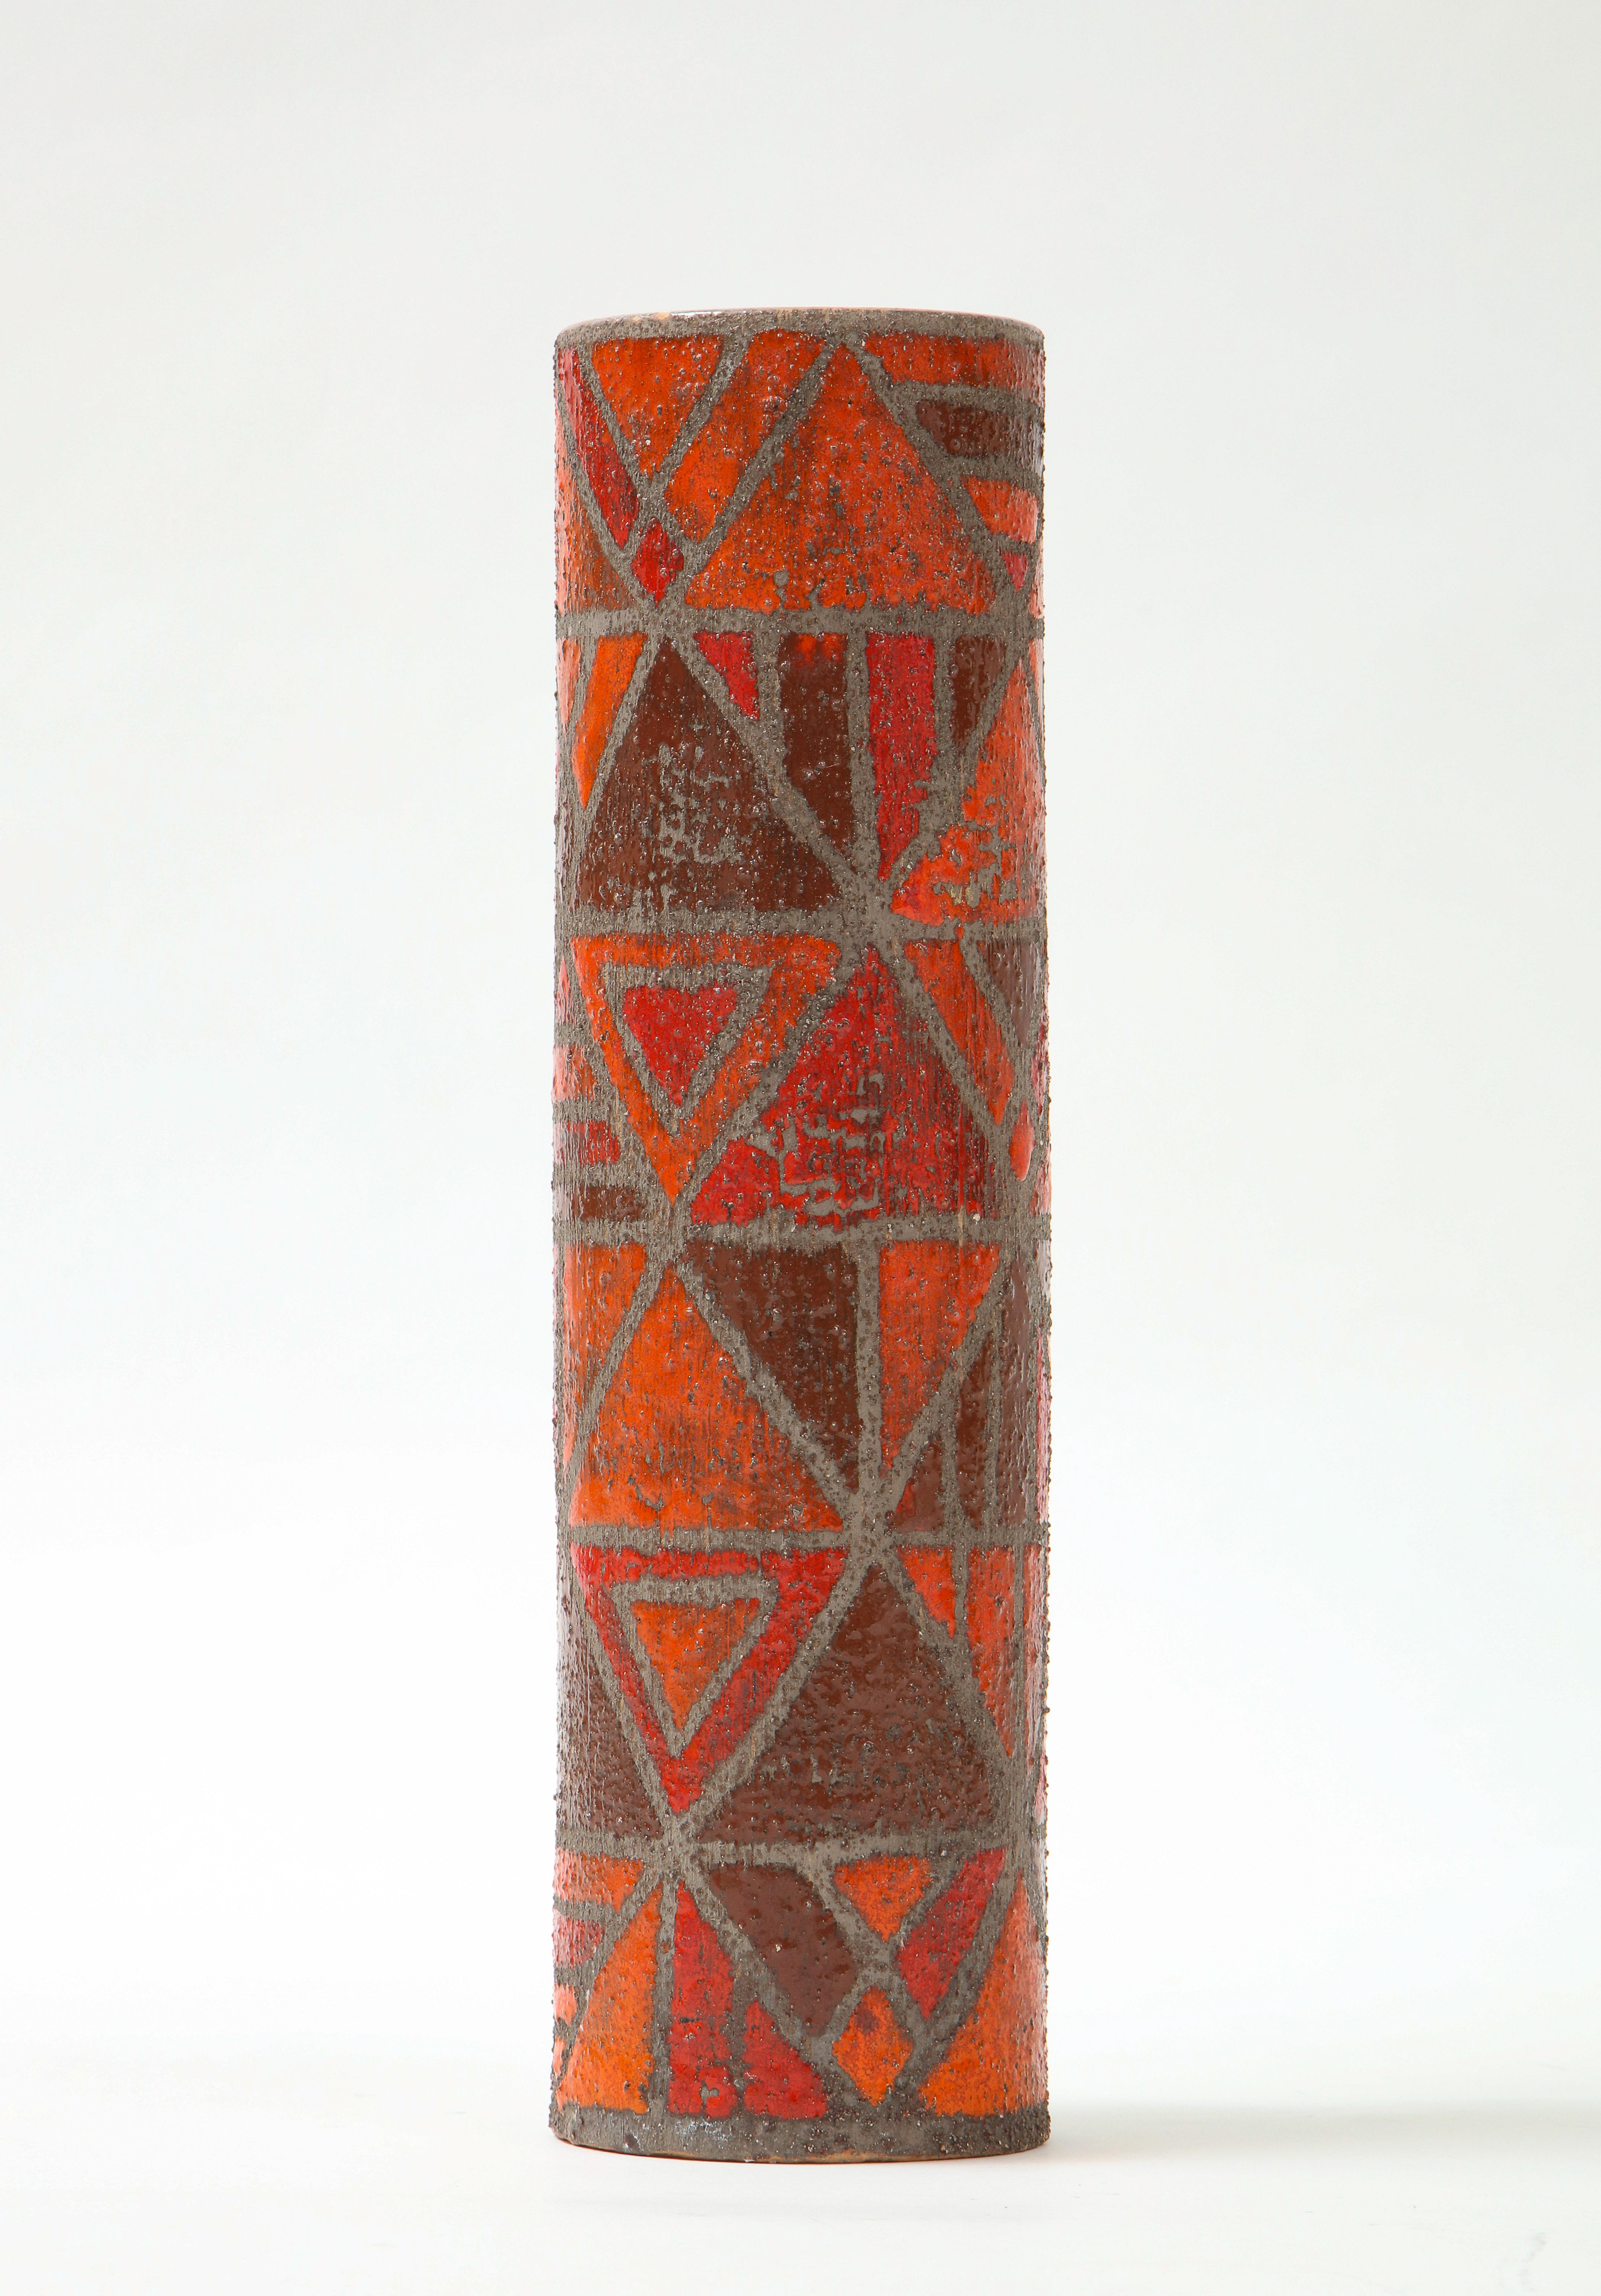 Italian mid century vase featuring an abstract geometric pattern in tones of orange-burnt orange. Signed.